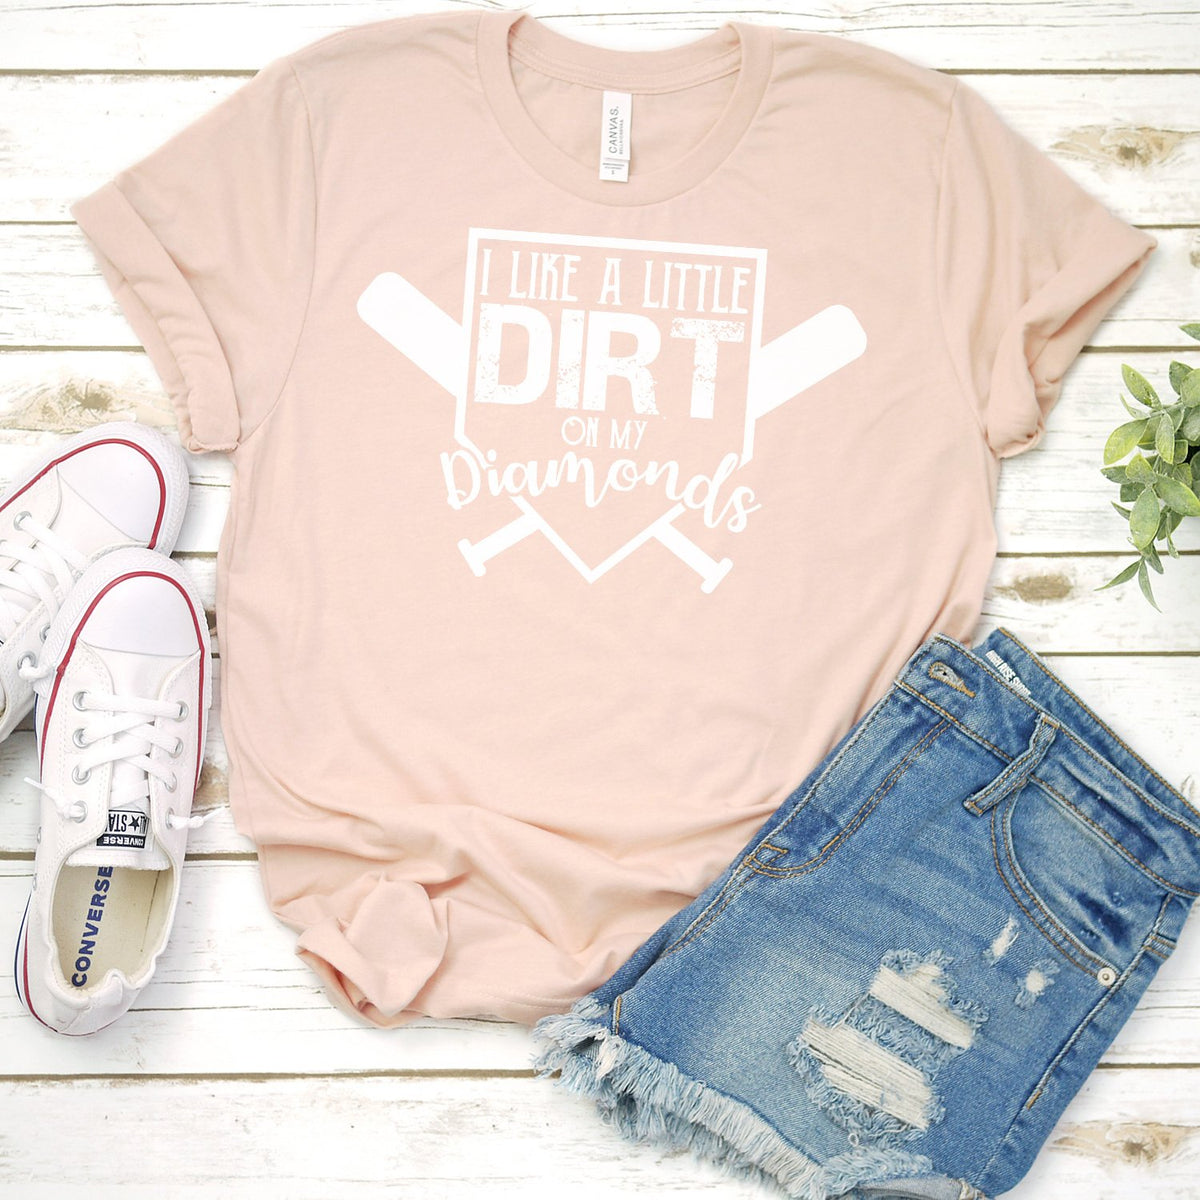 I Like A Little Dirt On My Diamonds - Short Sleeve Tee Shirt